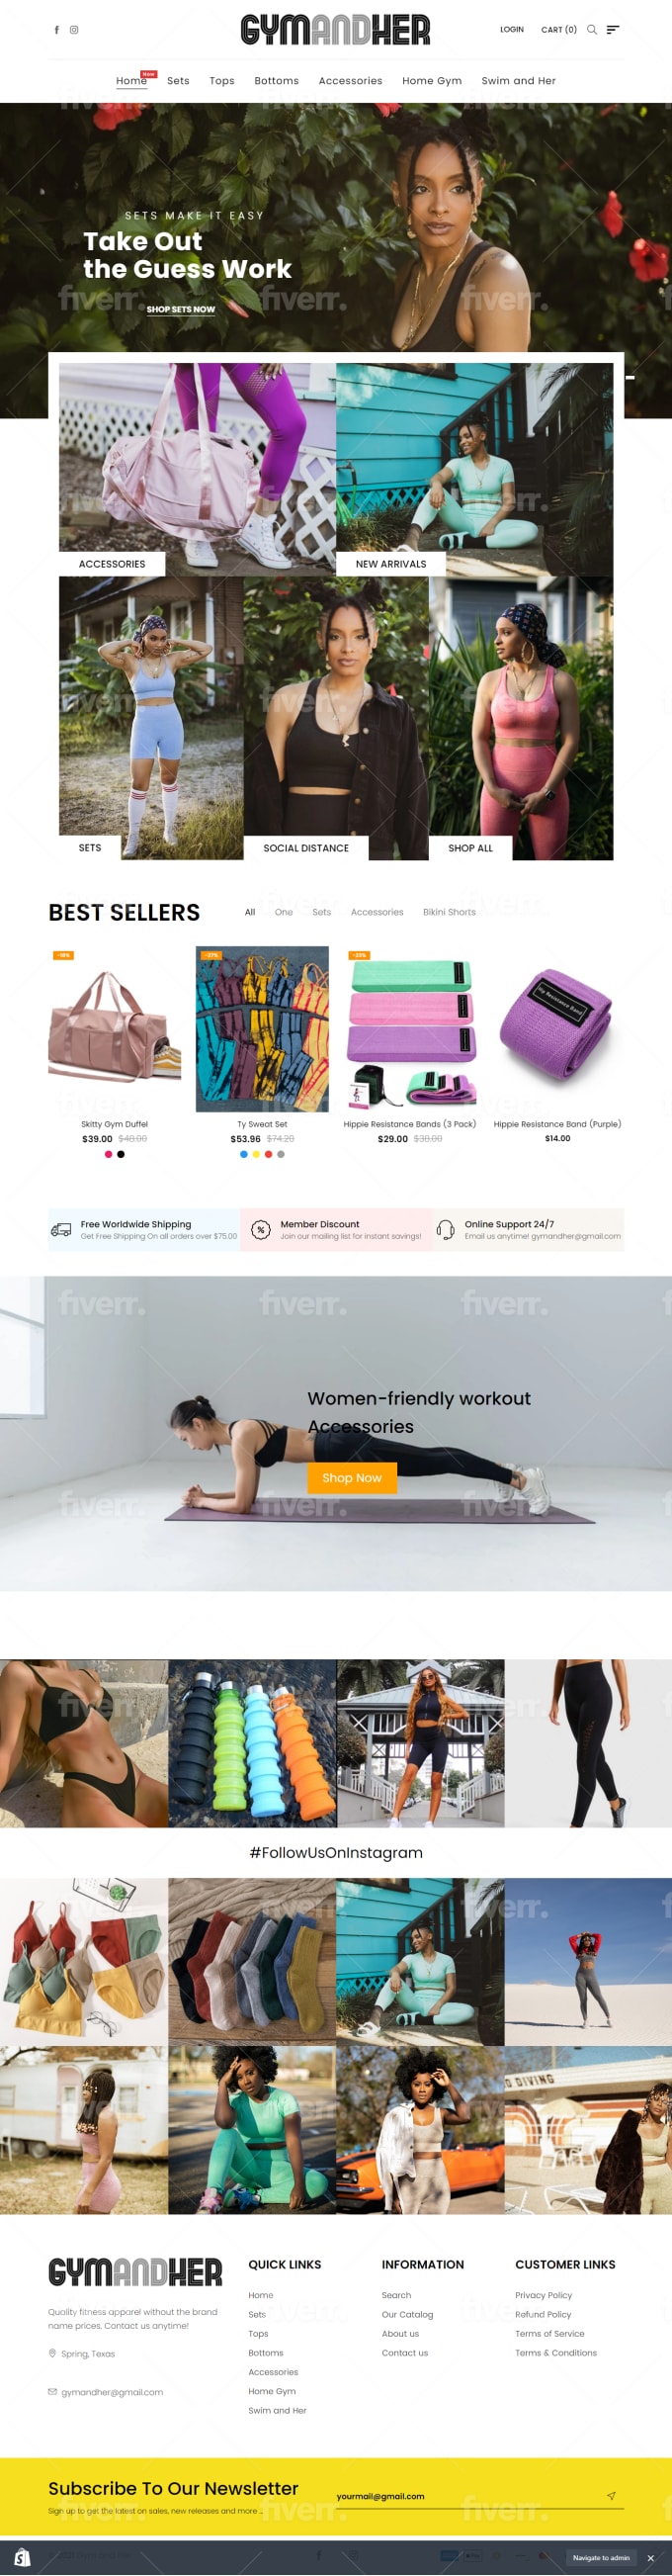 7 Pcs Yoga Set Health Fitness Home Includes Yoga Mat Yoga Blocks